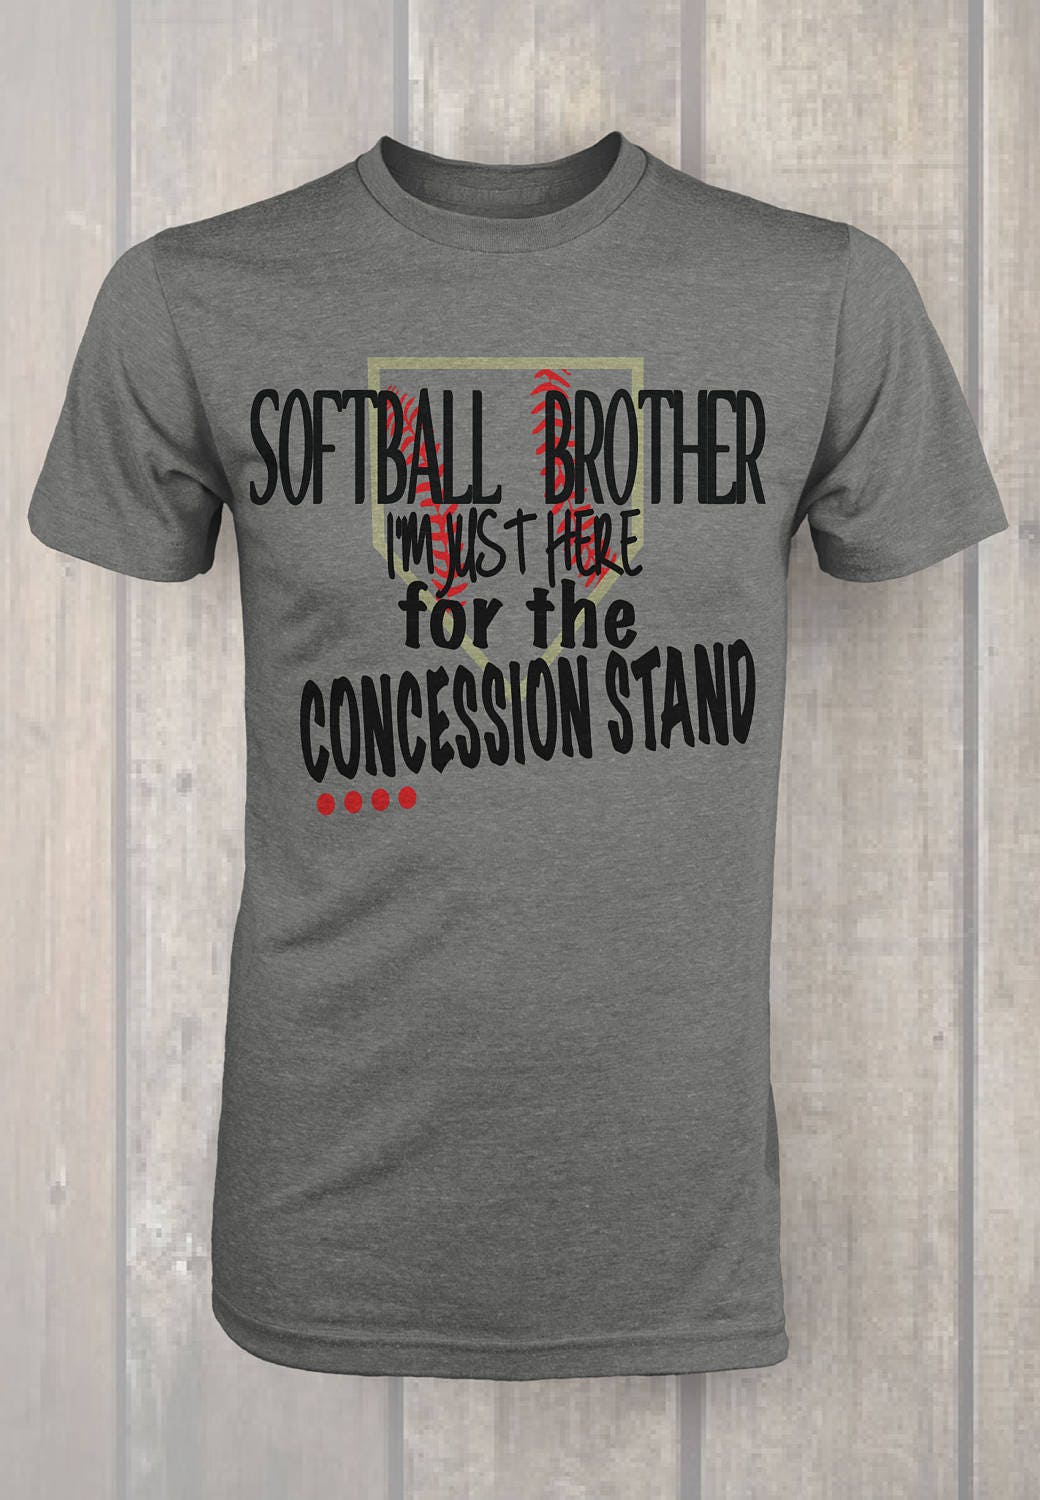 Download Softball Brother T-shirt Design SVG | Etsy